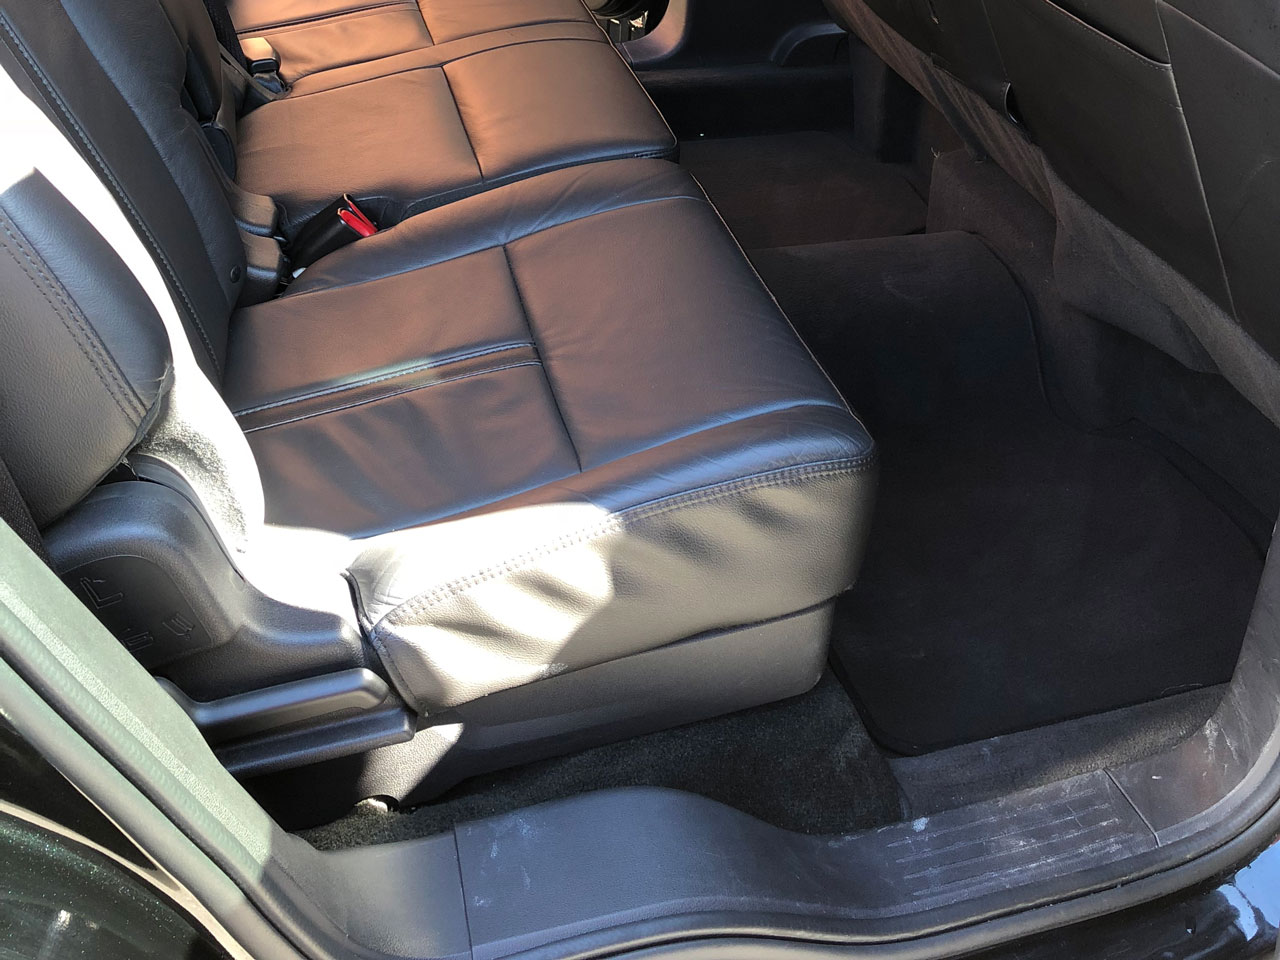 2019 Eagle Coach Company Lincoln MKT Regency Limousine 6